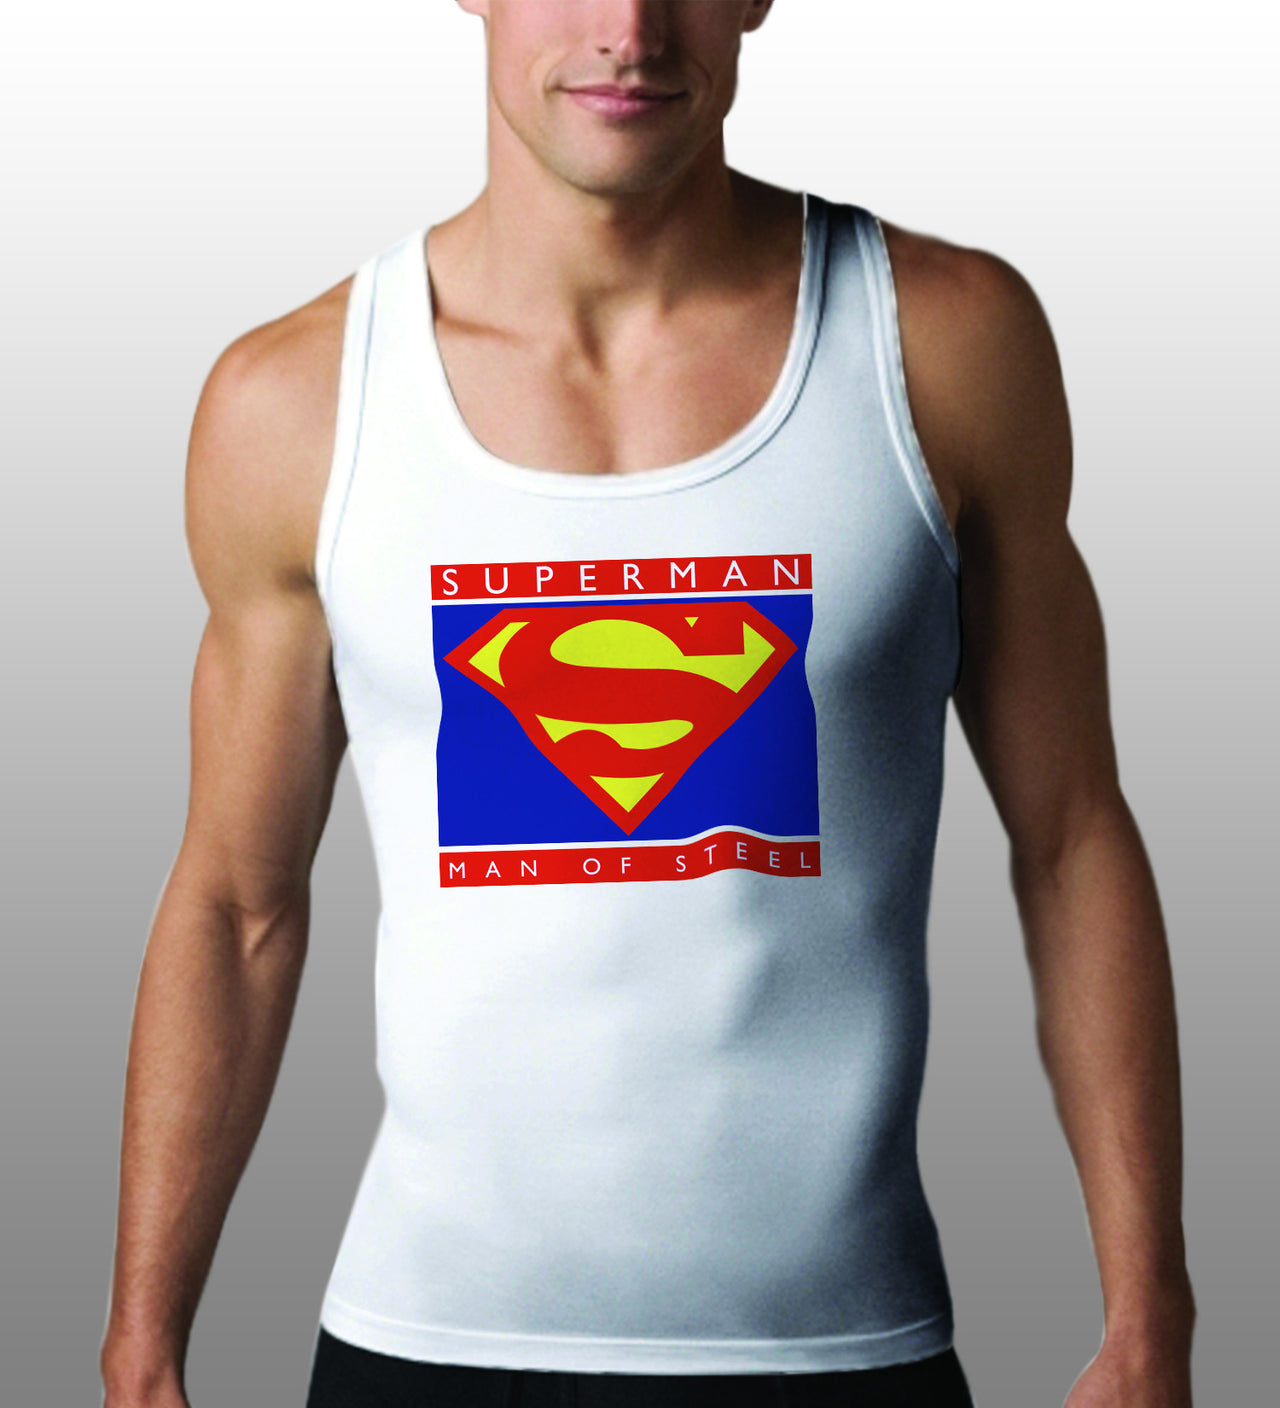 Superman Man of Steel Logo on White Colored Tank Top For Men - TshirtNow.net - 1